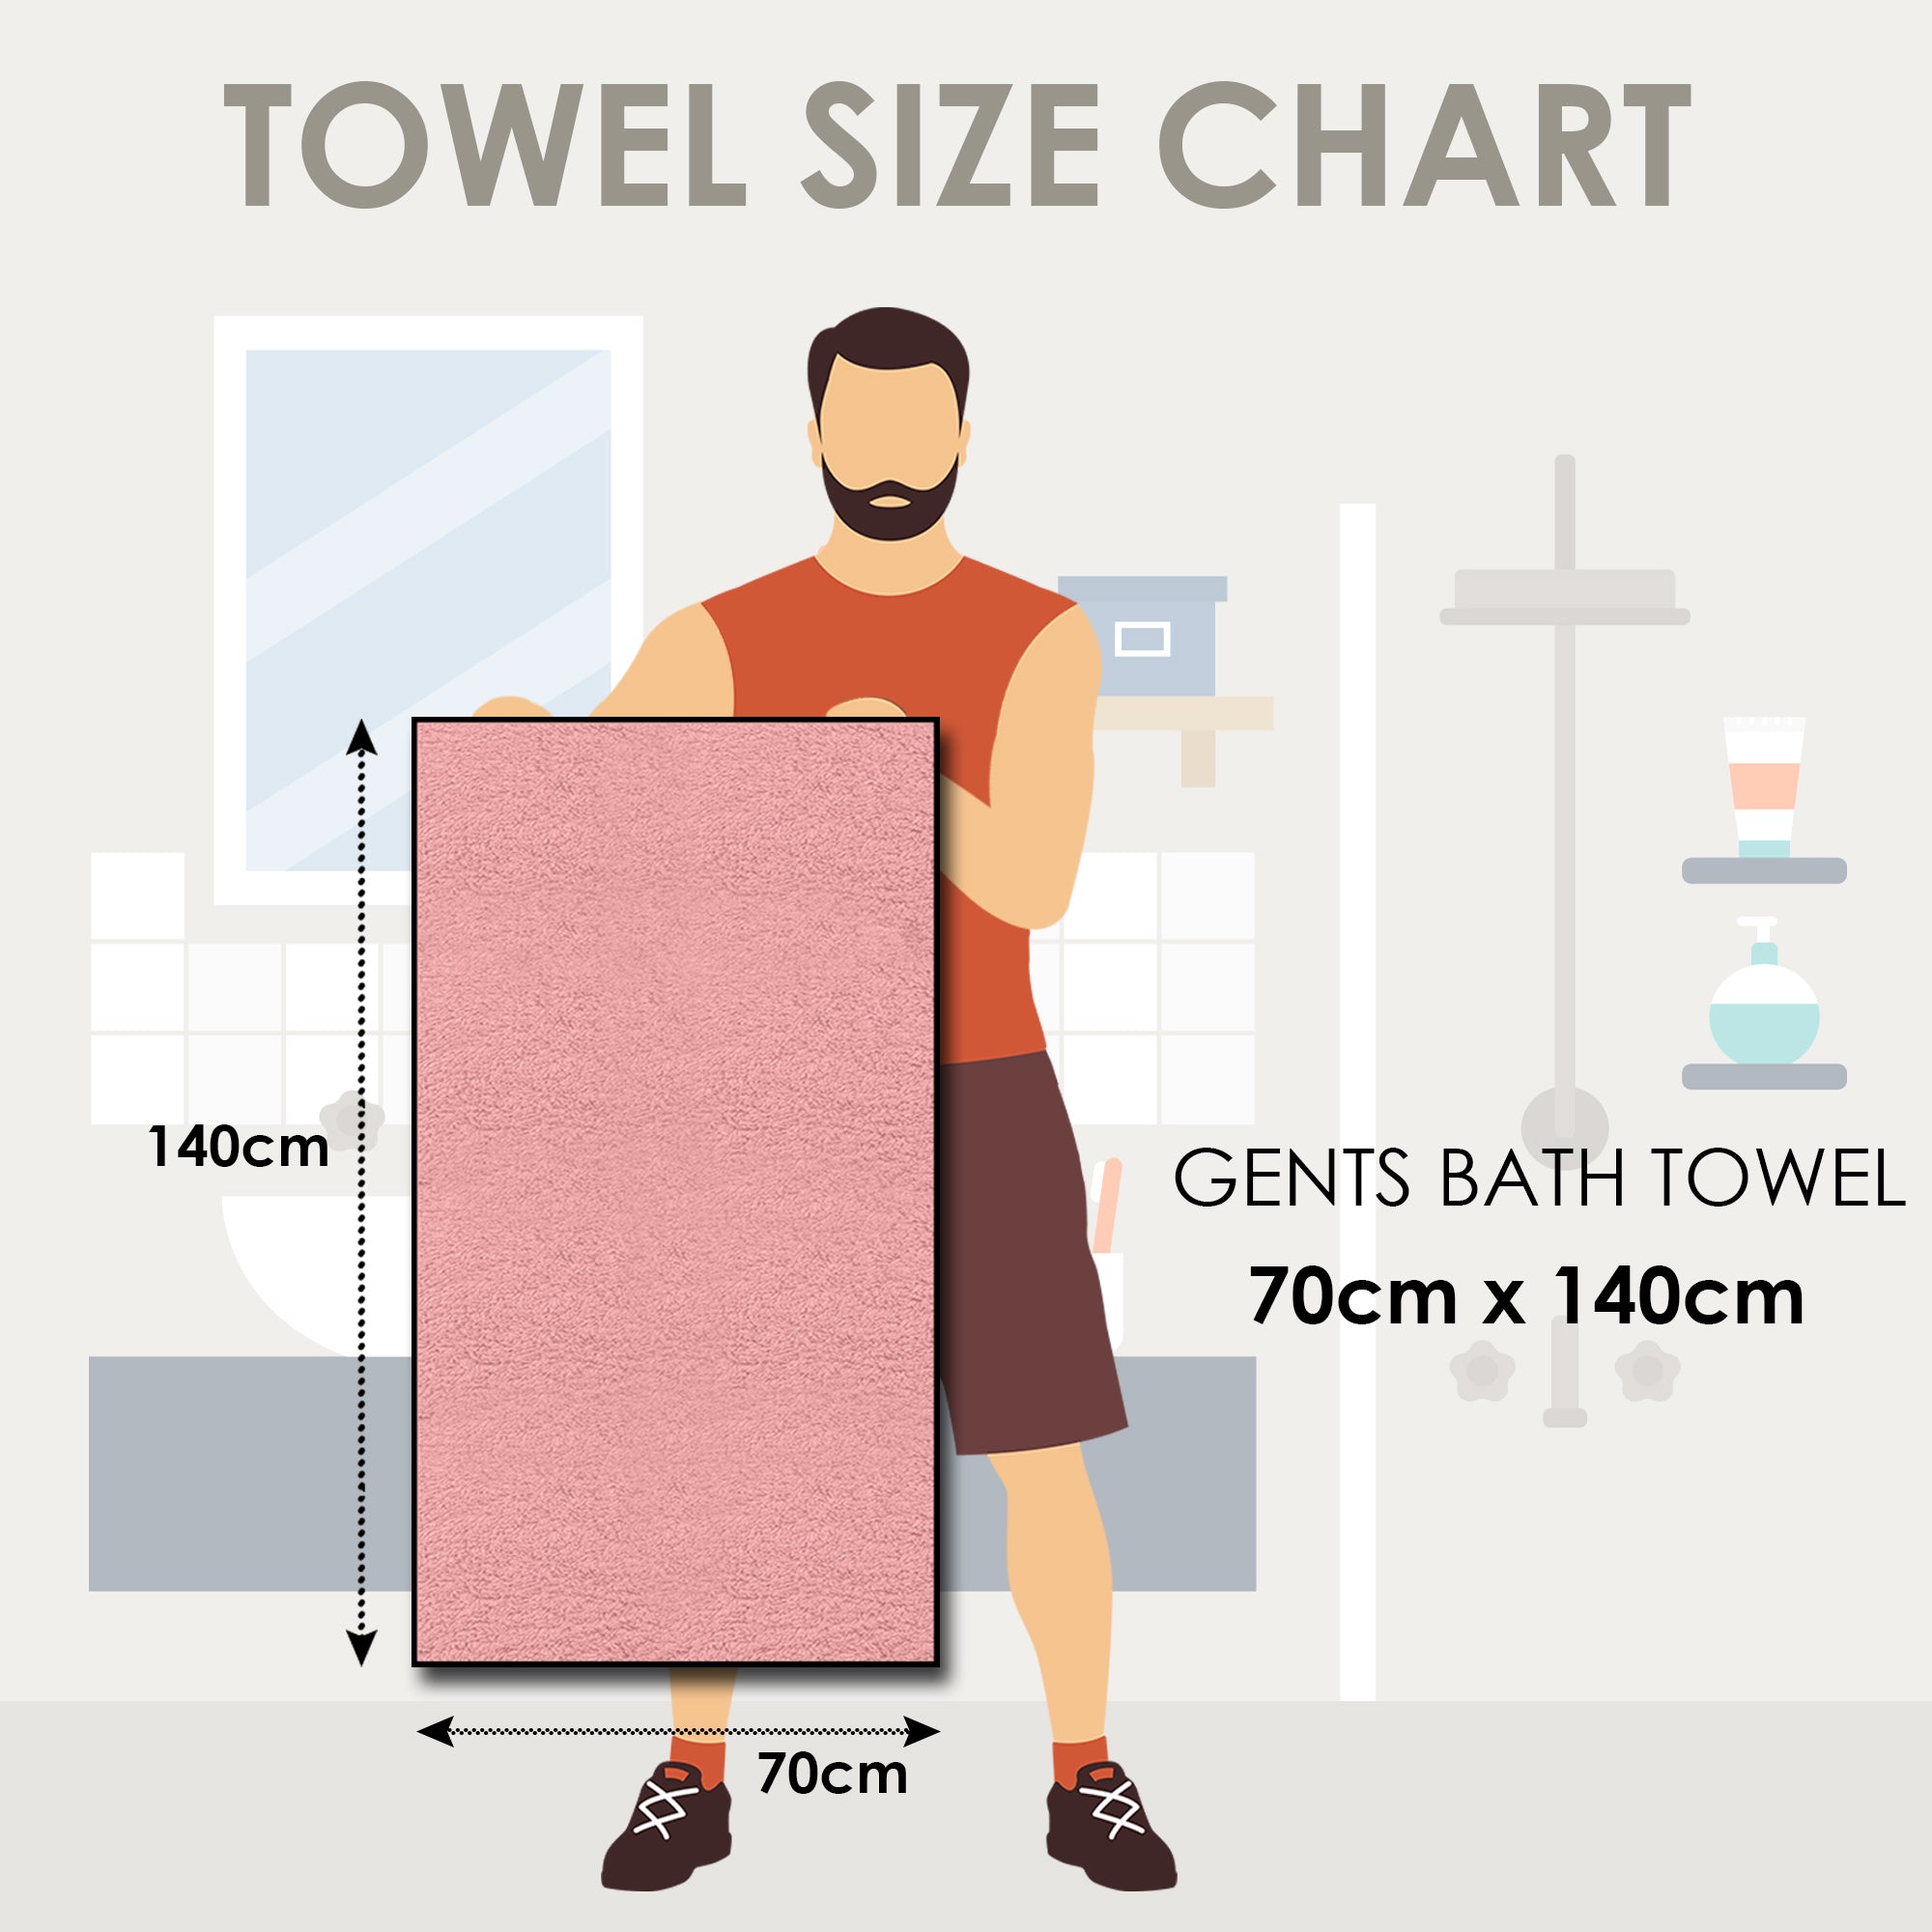 Story@Home 4 Units 100% Cotton Bath Towel - Pink